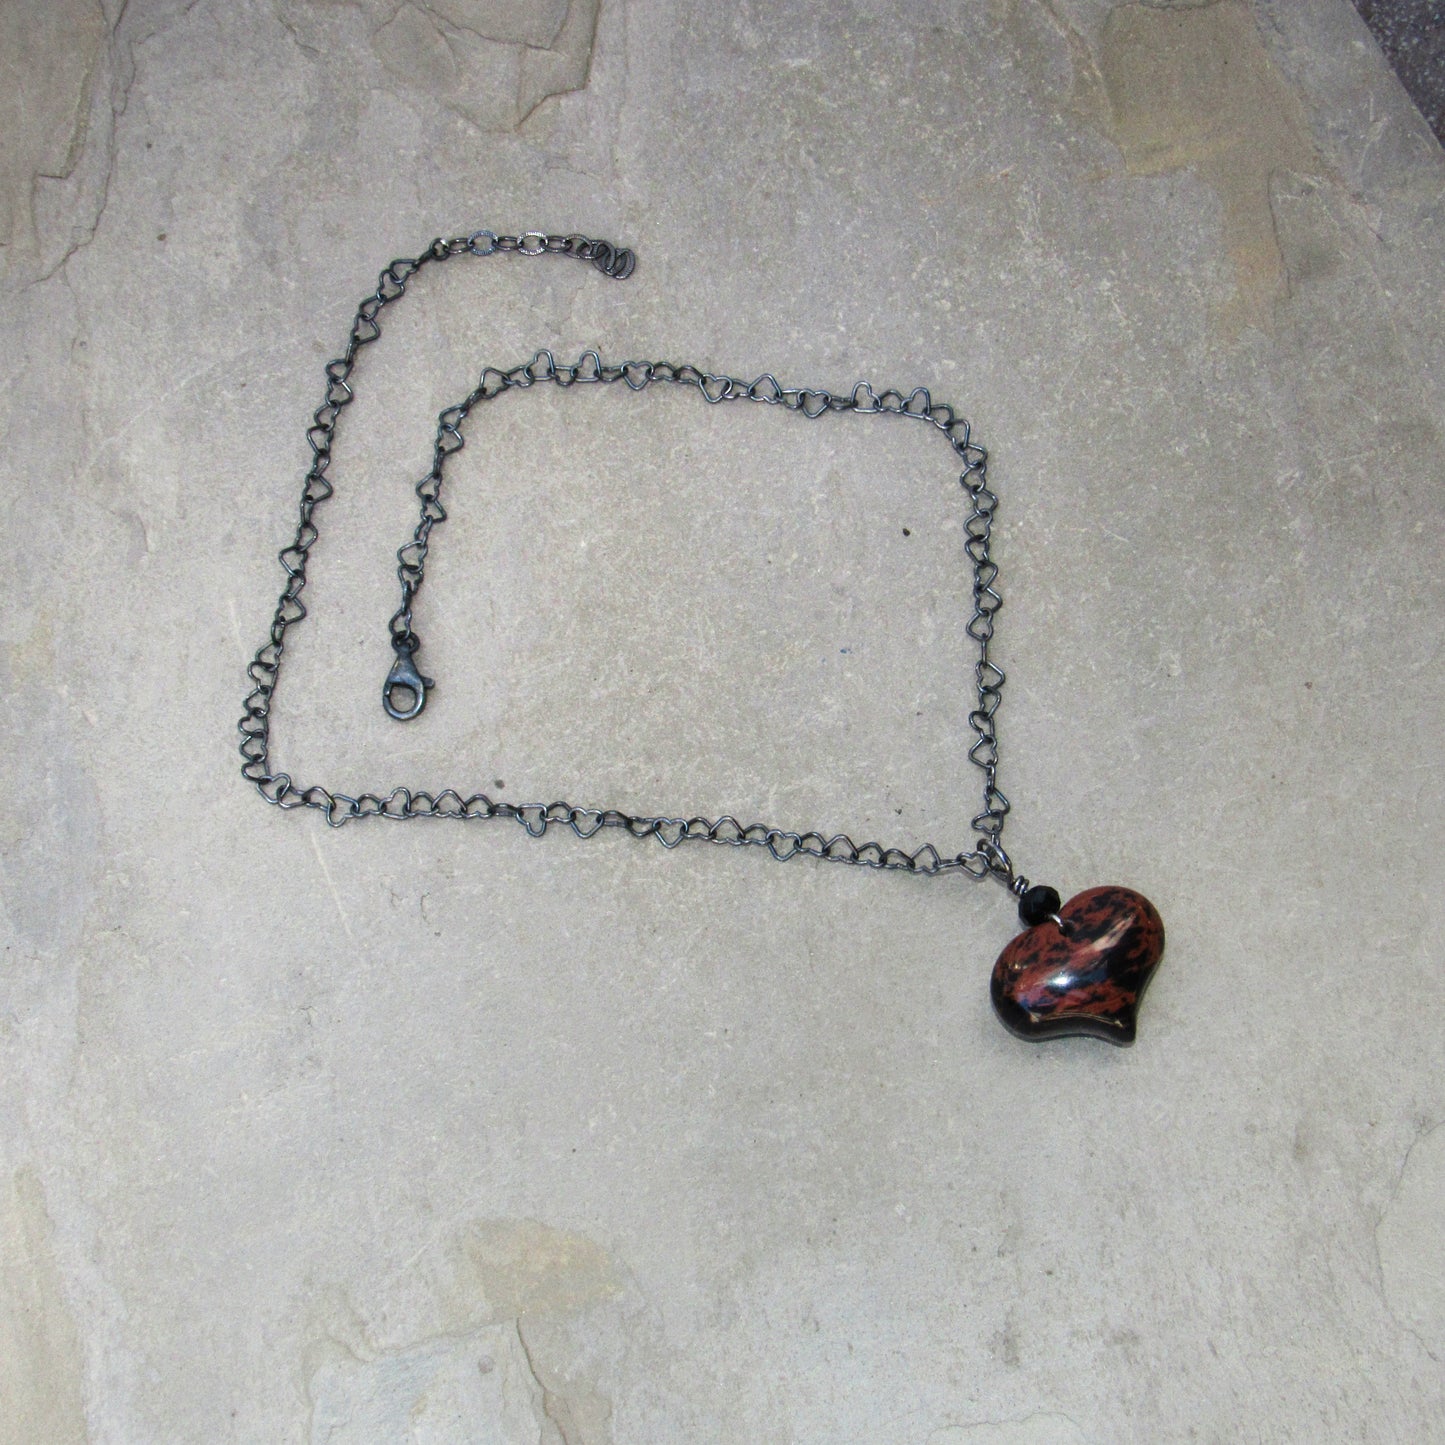 Gemstone Heart Pendants on Chain